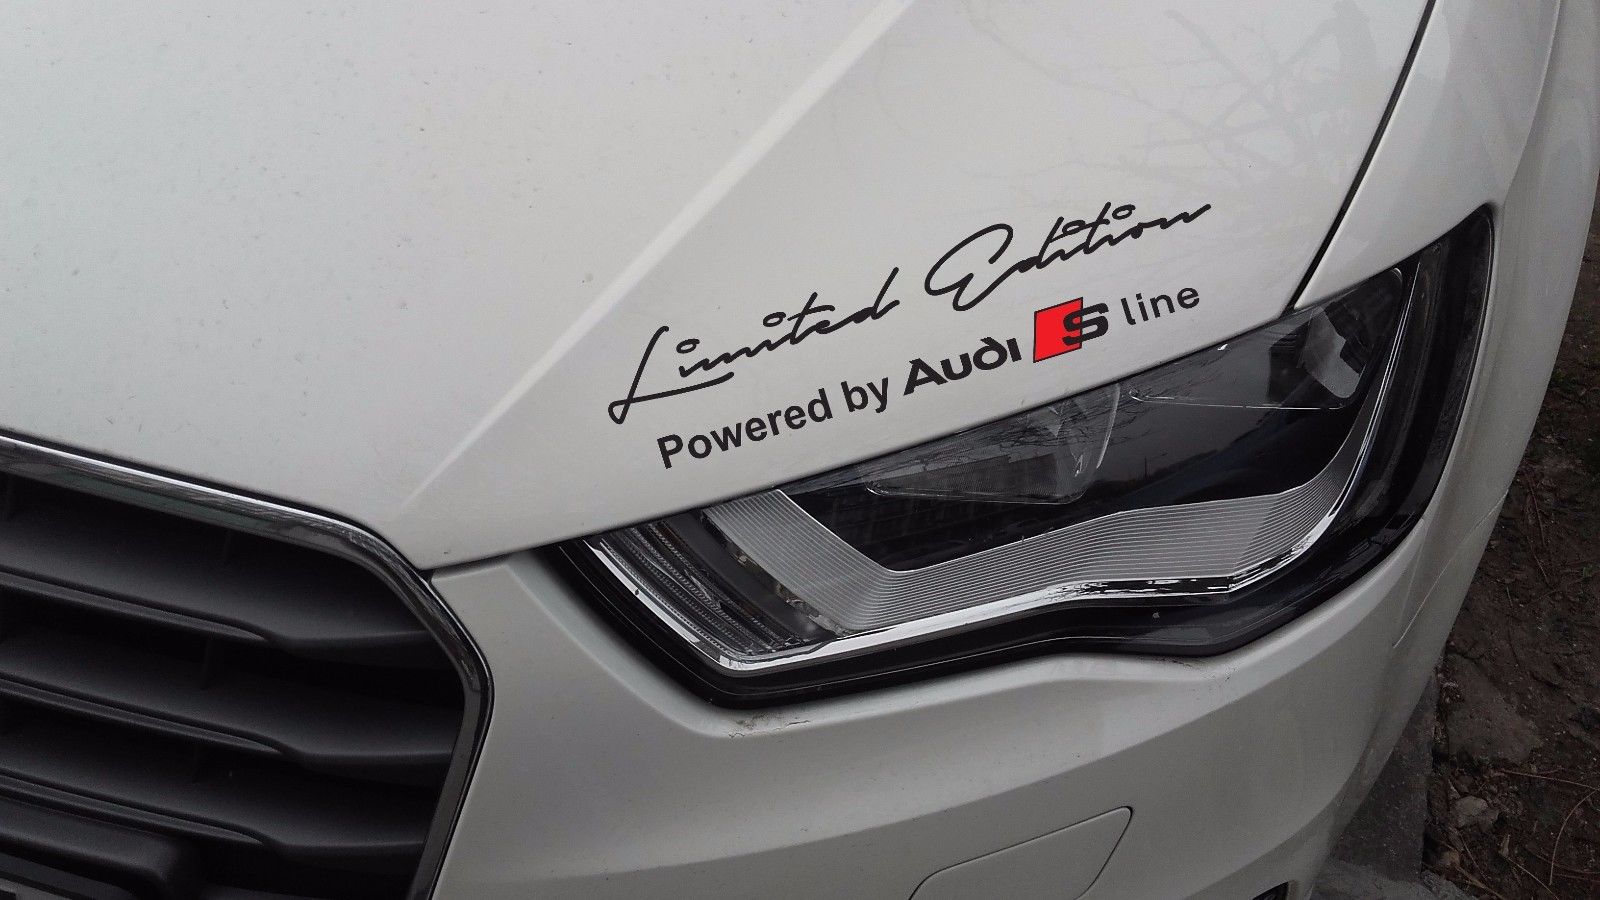 2 x Limited Edition Audi S Line Decal Sticker Compatibel met Audi S3 S4 S5 S6